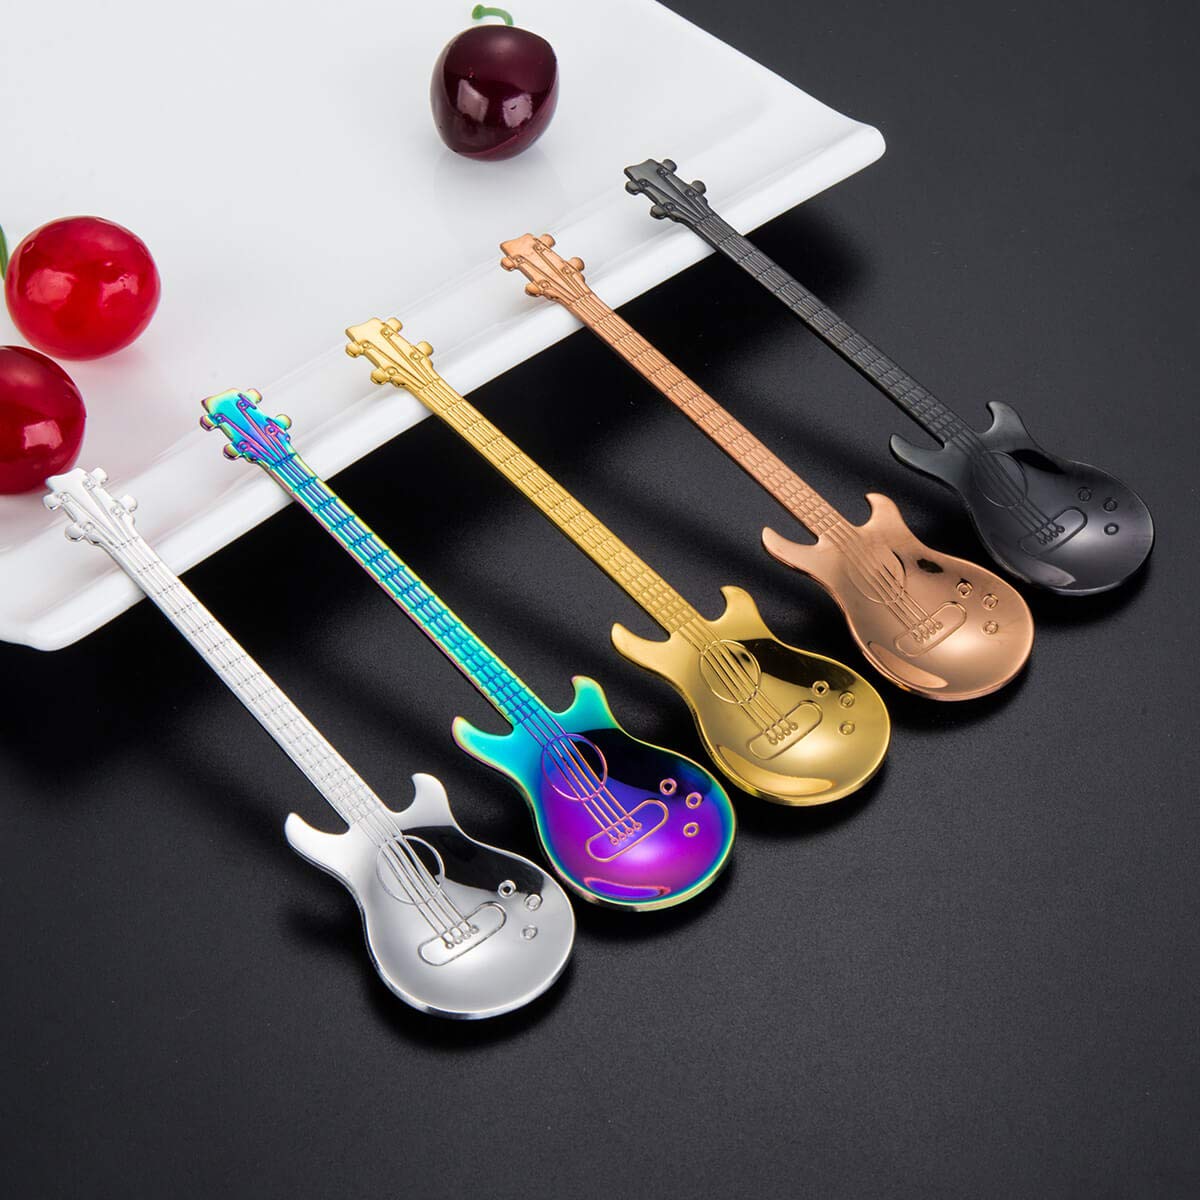 Guitar Spoon Set Stainless Steel Coffee Spoon - Demitasse Espresso Spoons 5pcs Solike